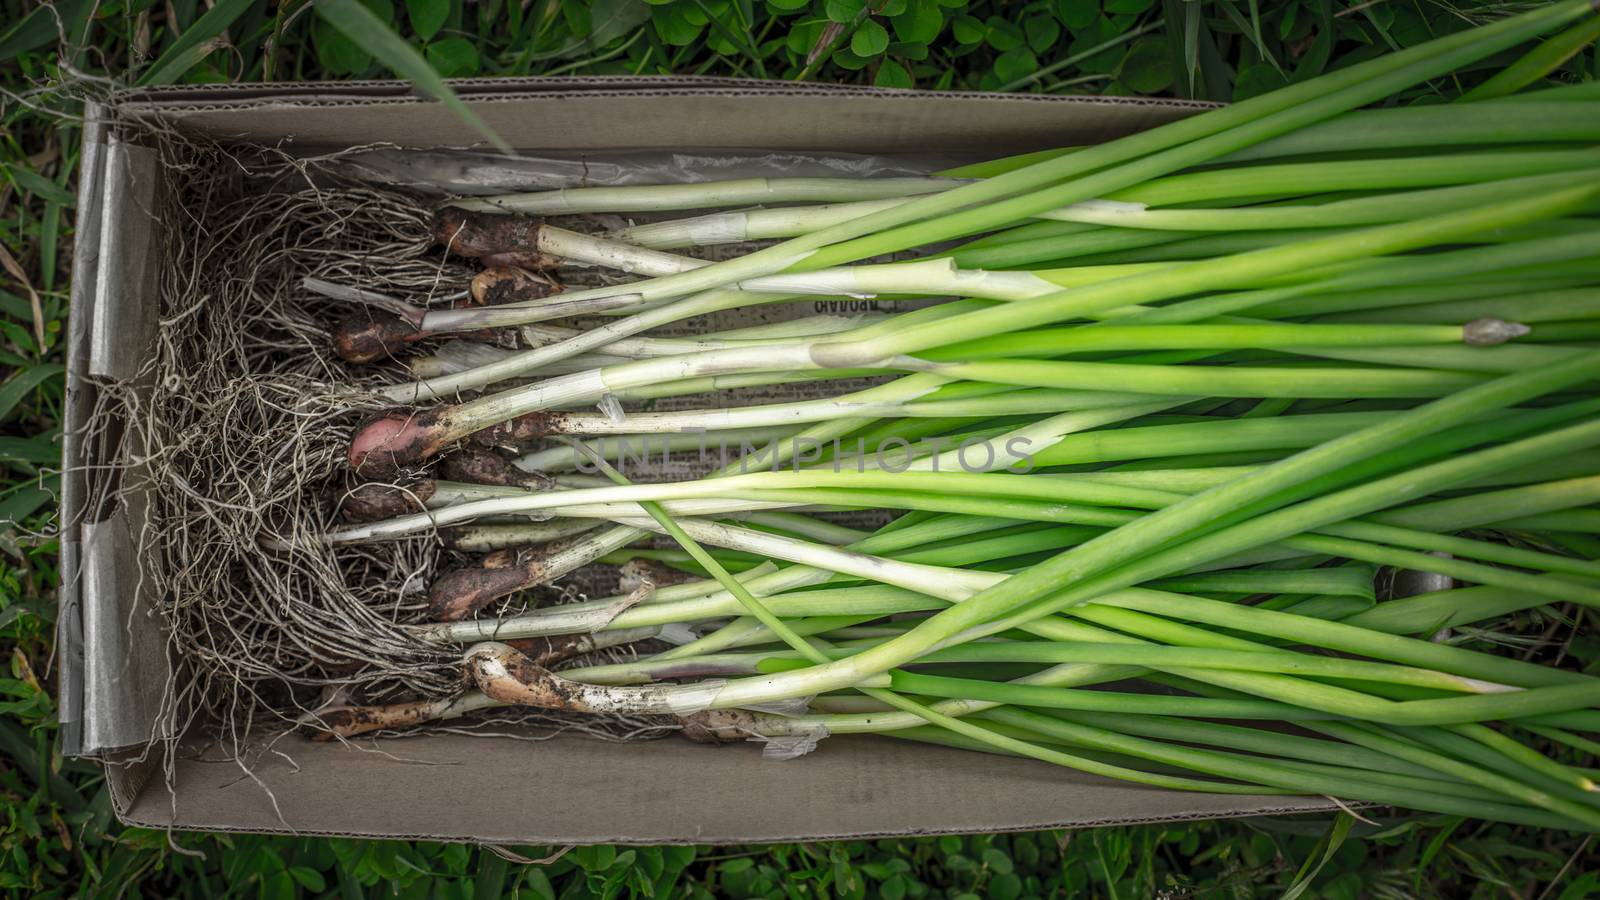 Green onions in the box by Deniskarpenkov